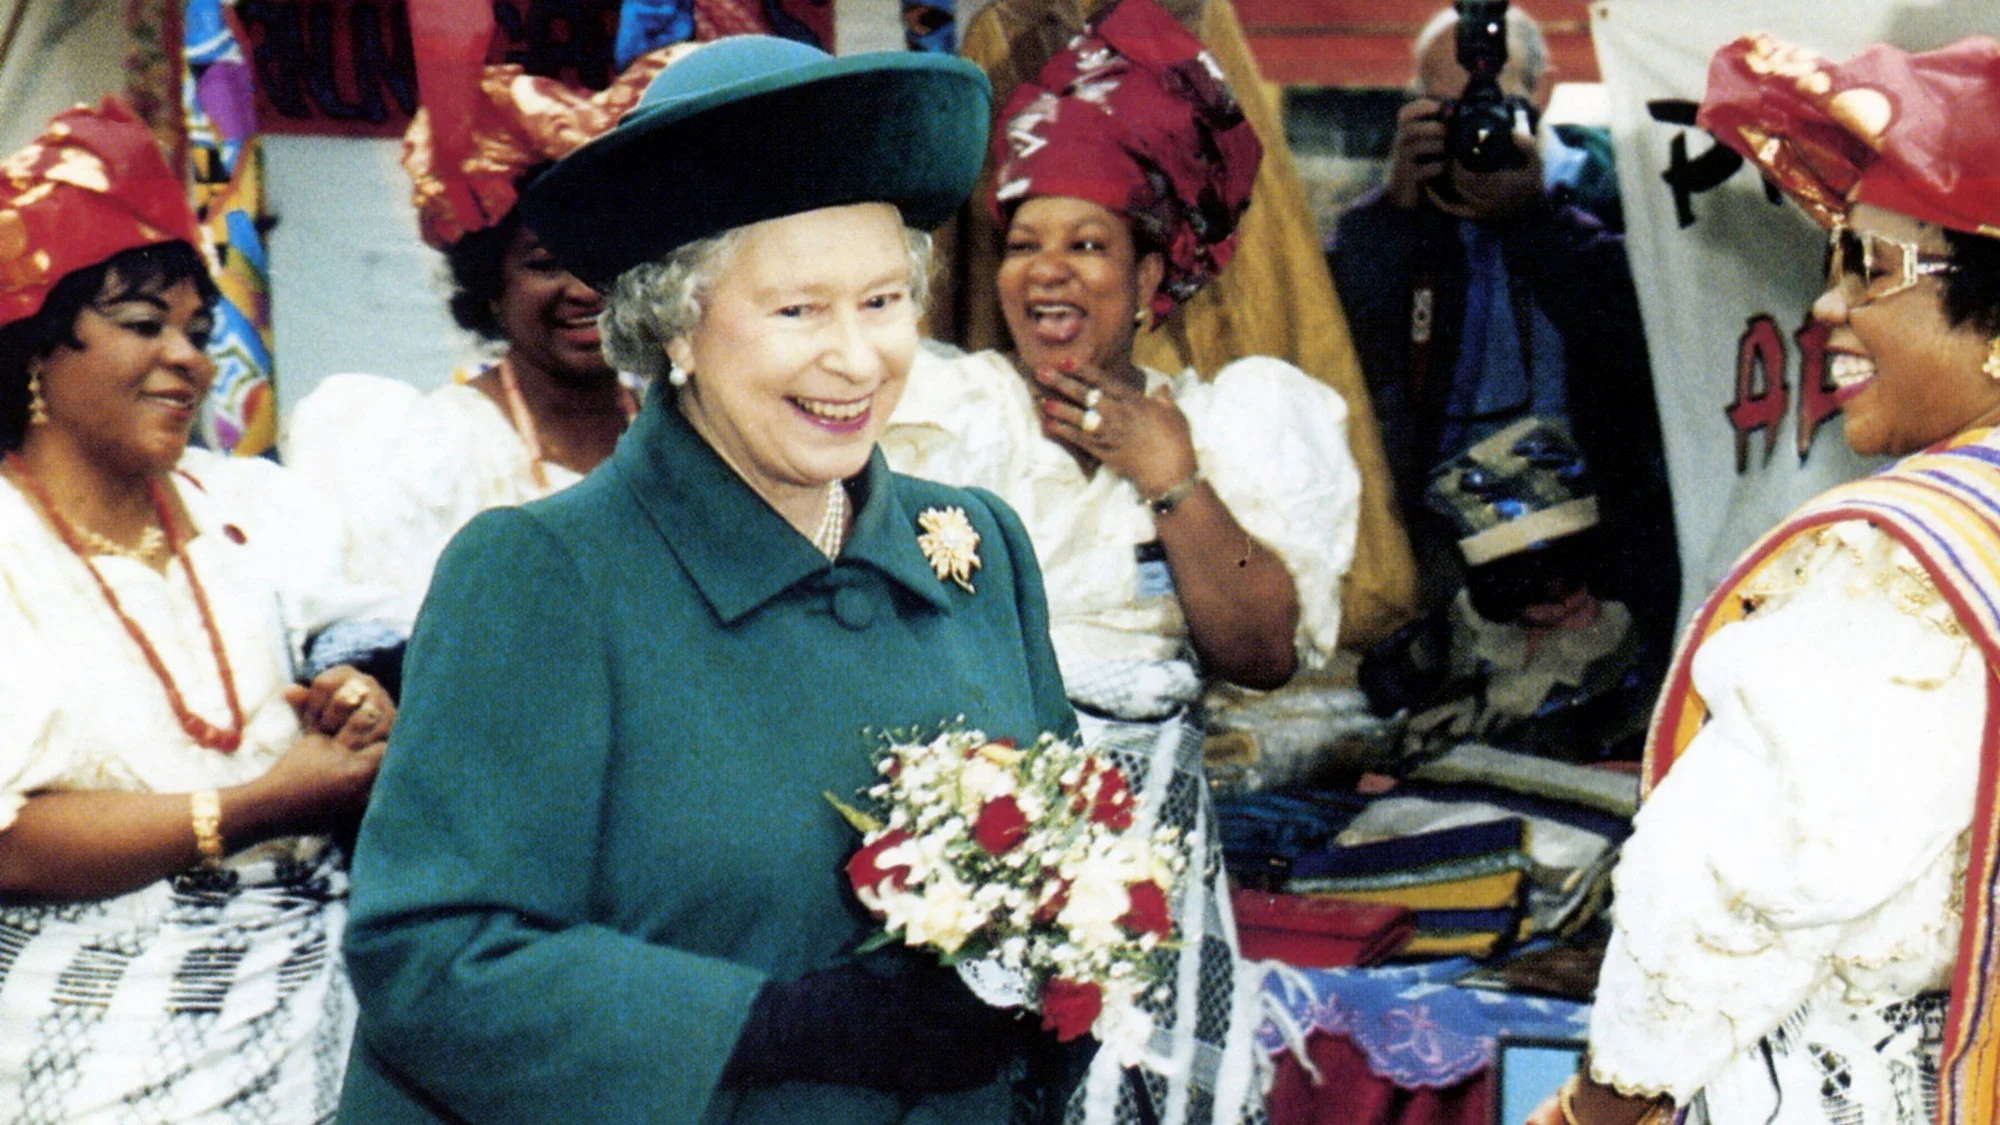 Arriving in London’s Deptford for the Africa ’95 celebrations, 1995